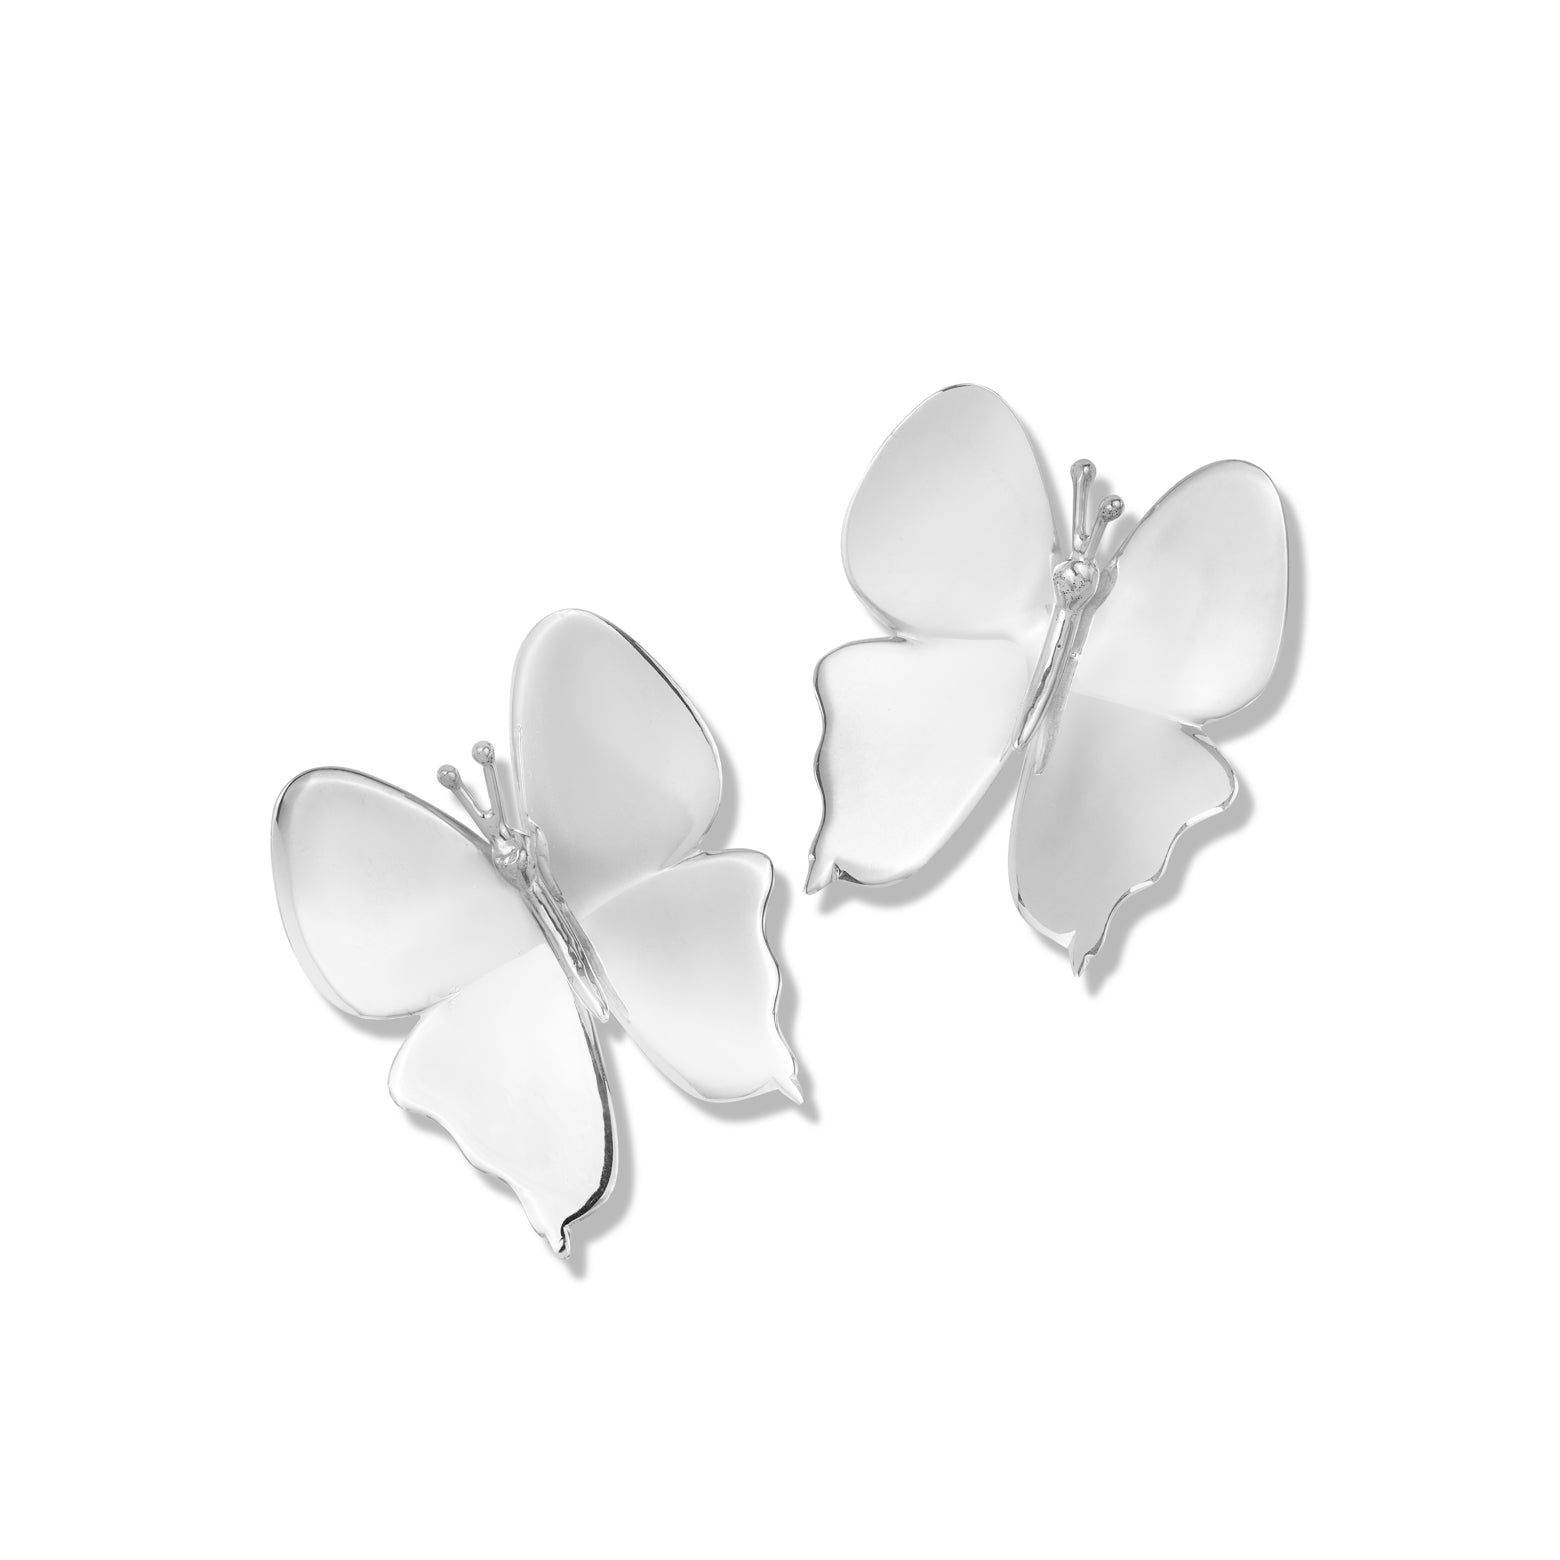 Kelly Woodcroft hand cast silver ulysses butterfly shaped earrings in silver.